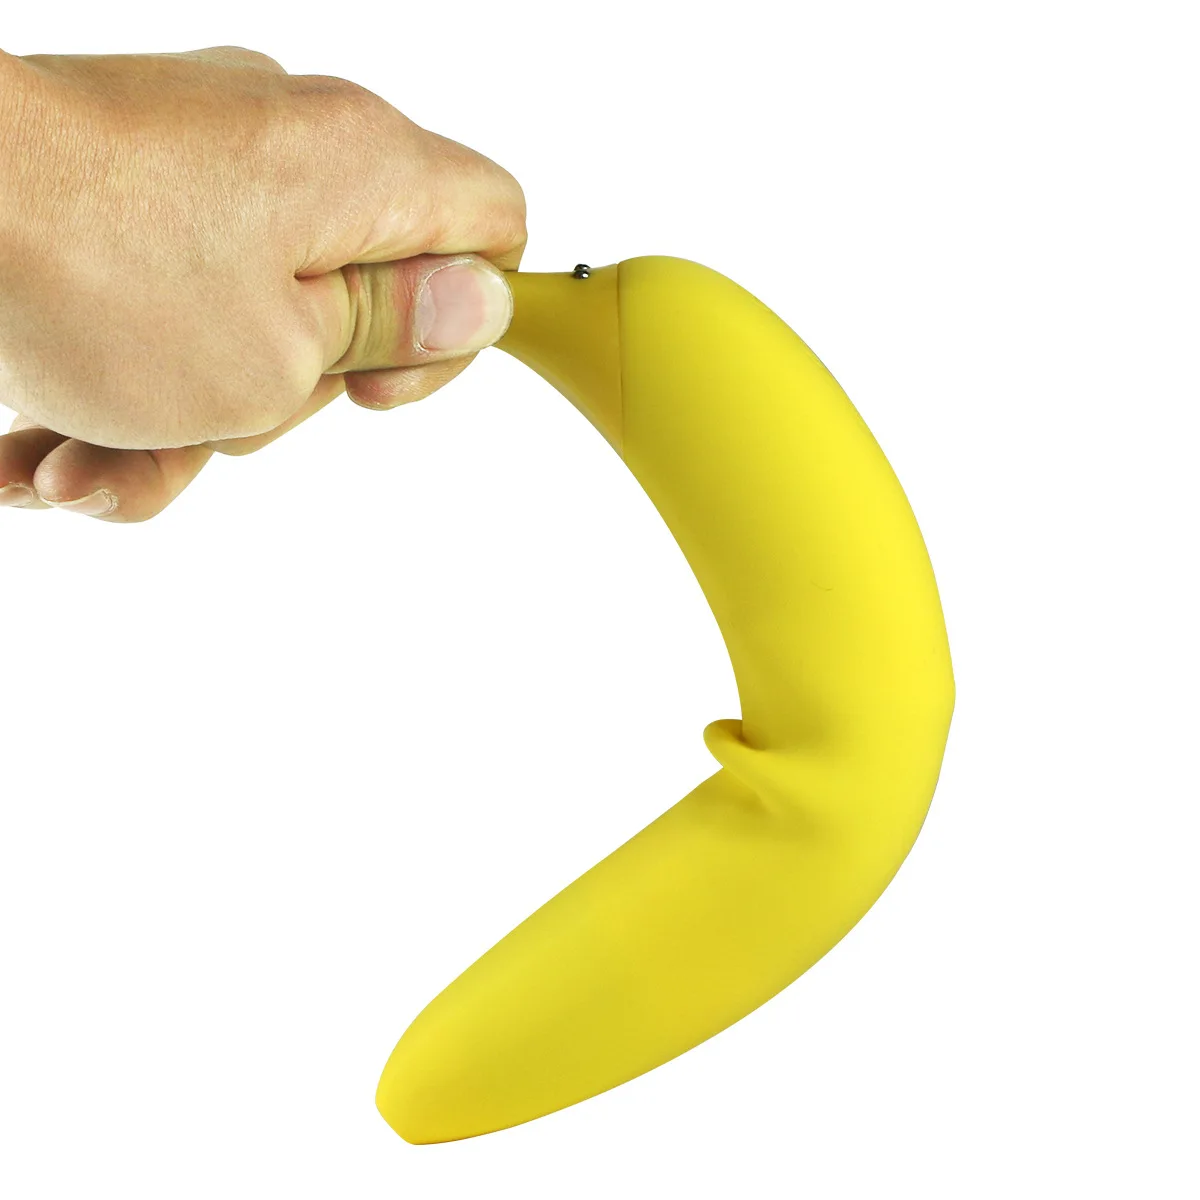 Banana Shaped Dildo